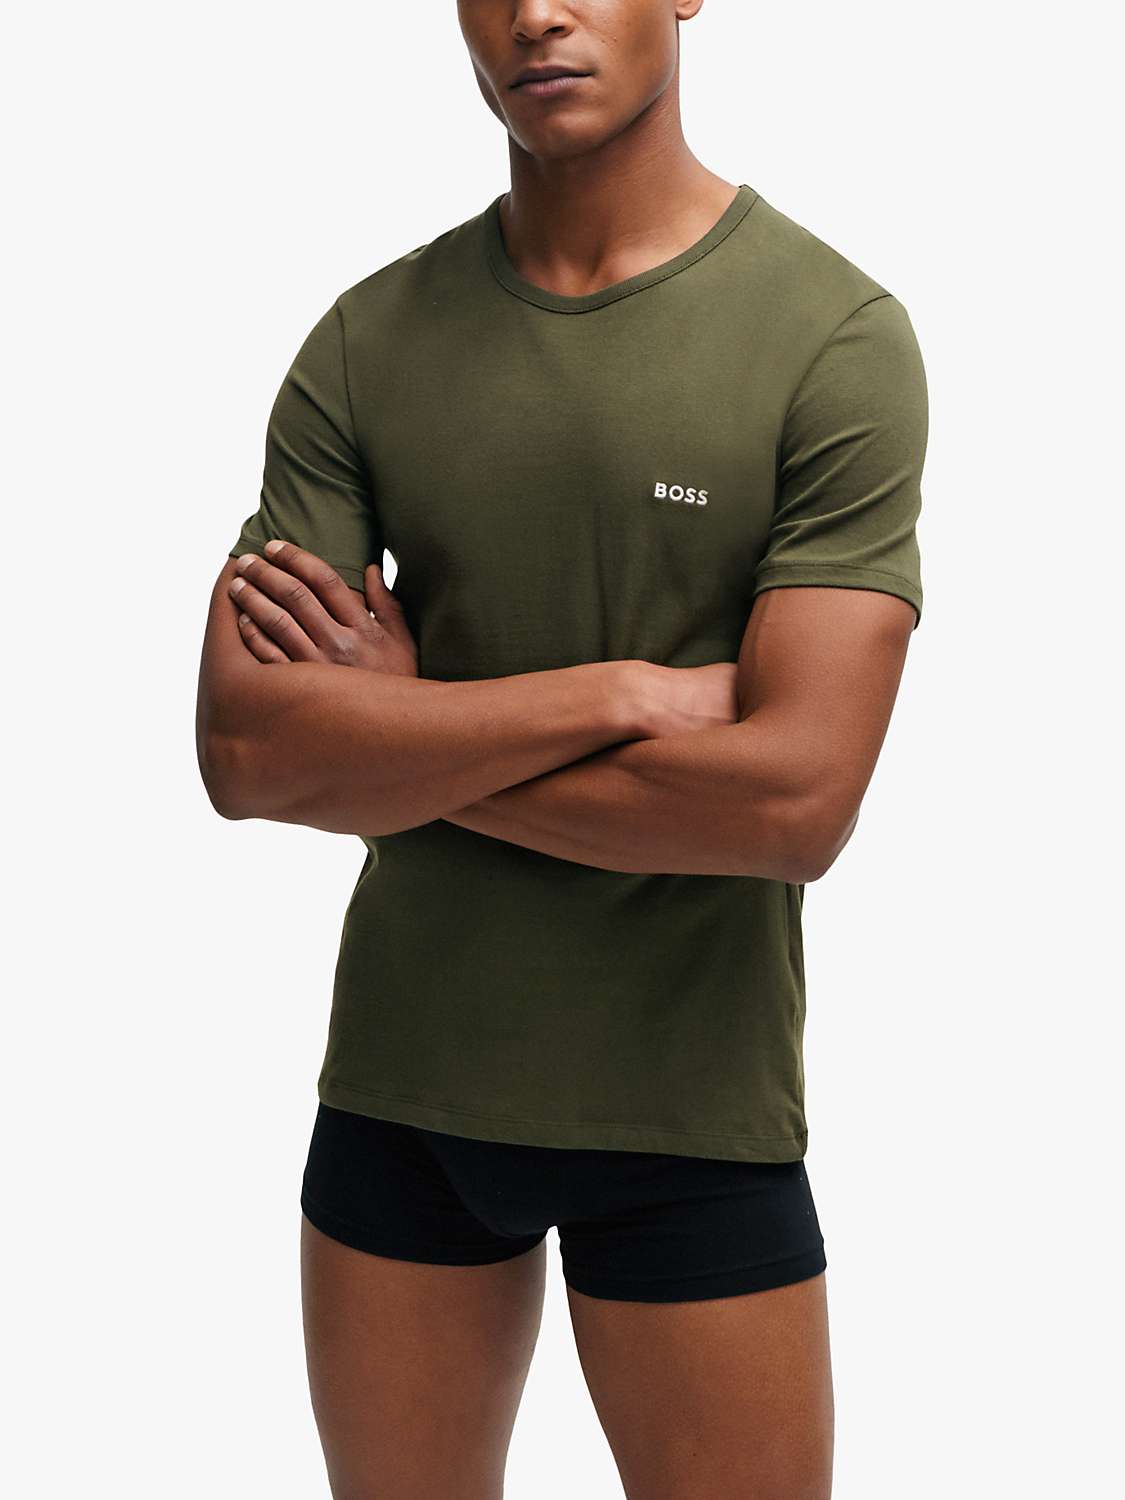 Buy BOSS Regular Fit T-Shirt, Pack of 3, Black/Khaki/Navy Online at johnlewis.com